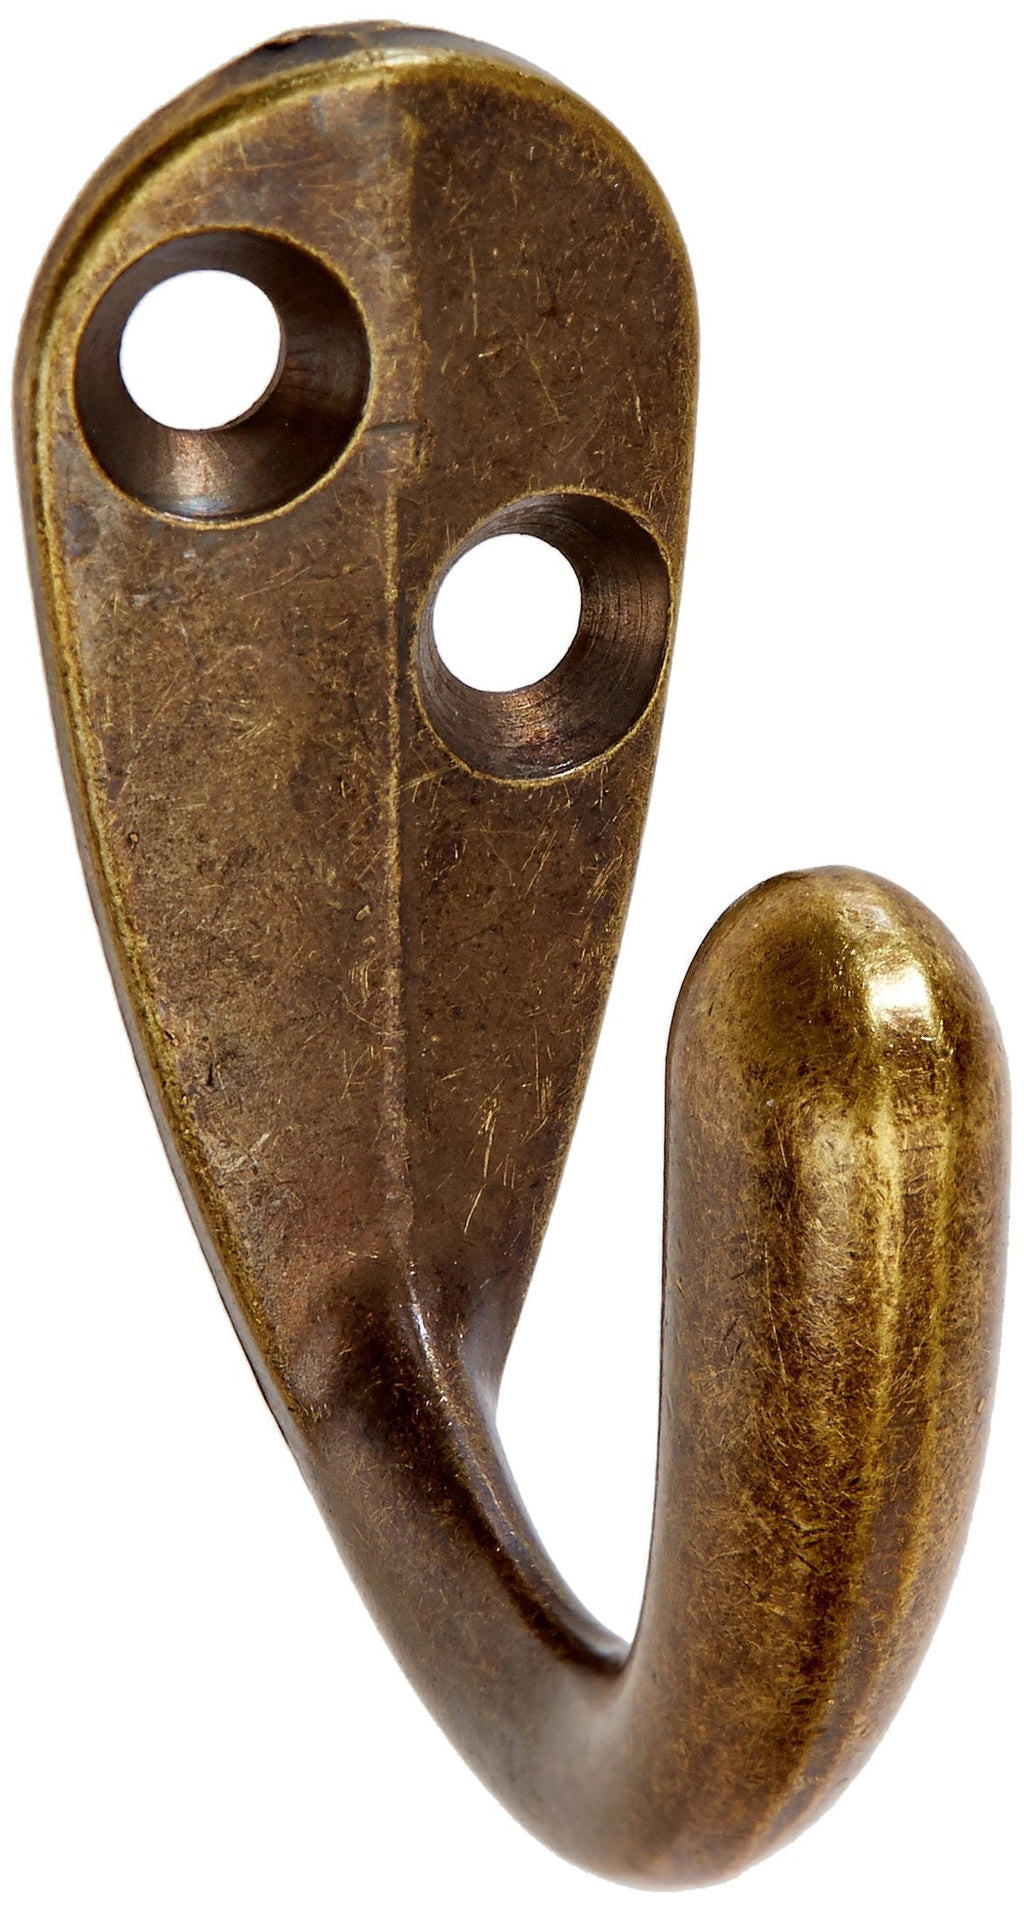 NATIONAL MFG/SPECTRUM BRANDS HHI N830-140 Single Prong Robe Hook, Antique Brass